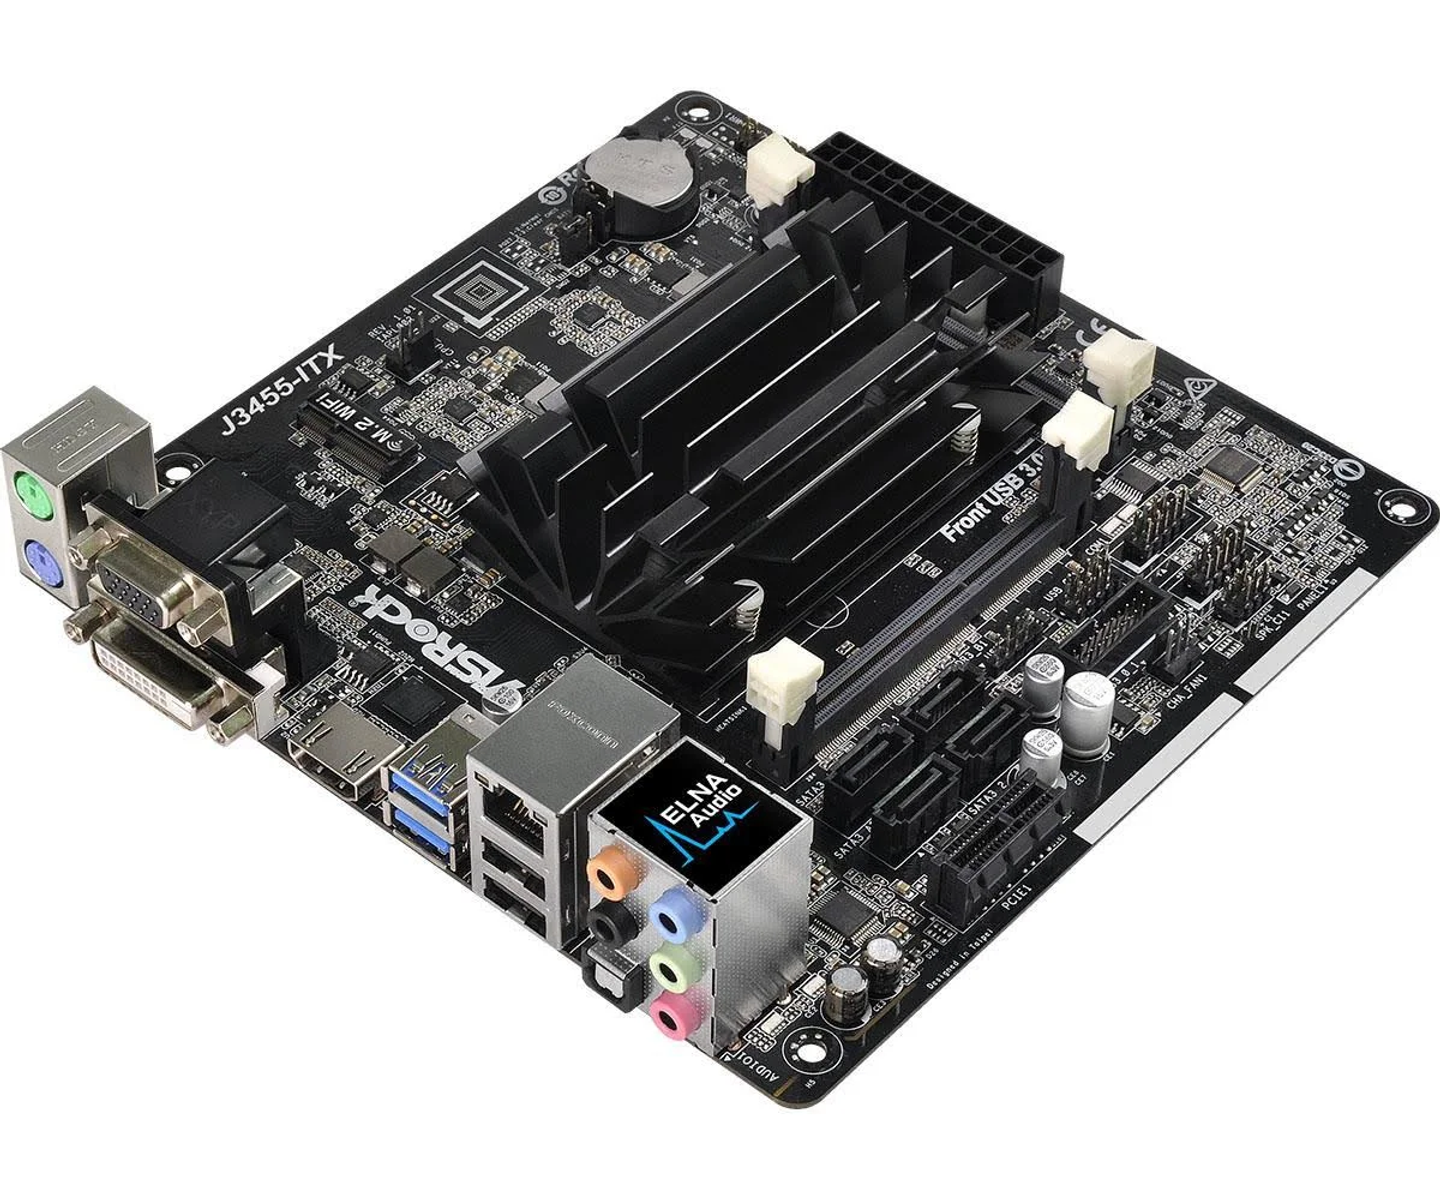 CPU Black Mainboard ASROCK + Bundle J3455-ITX